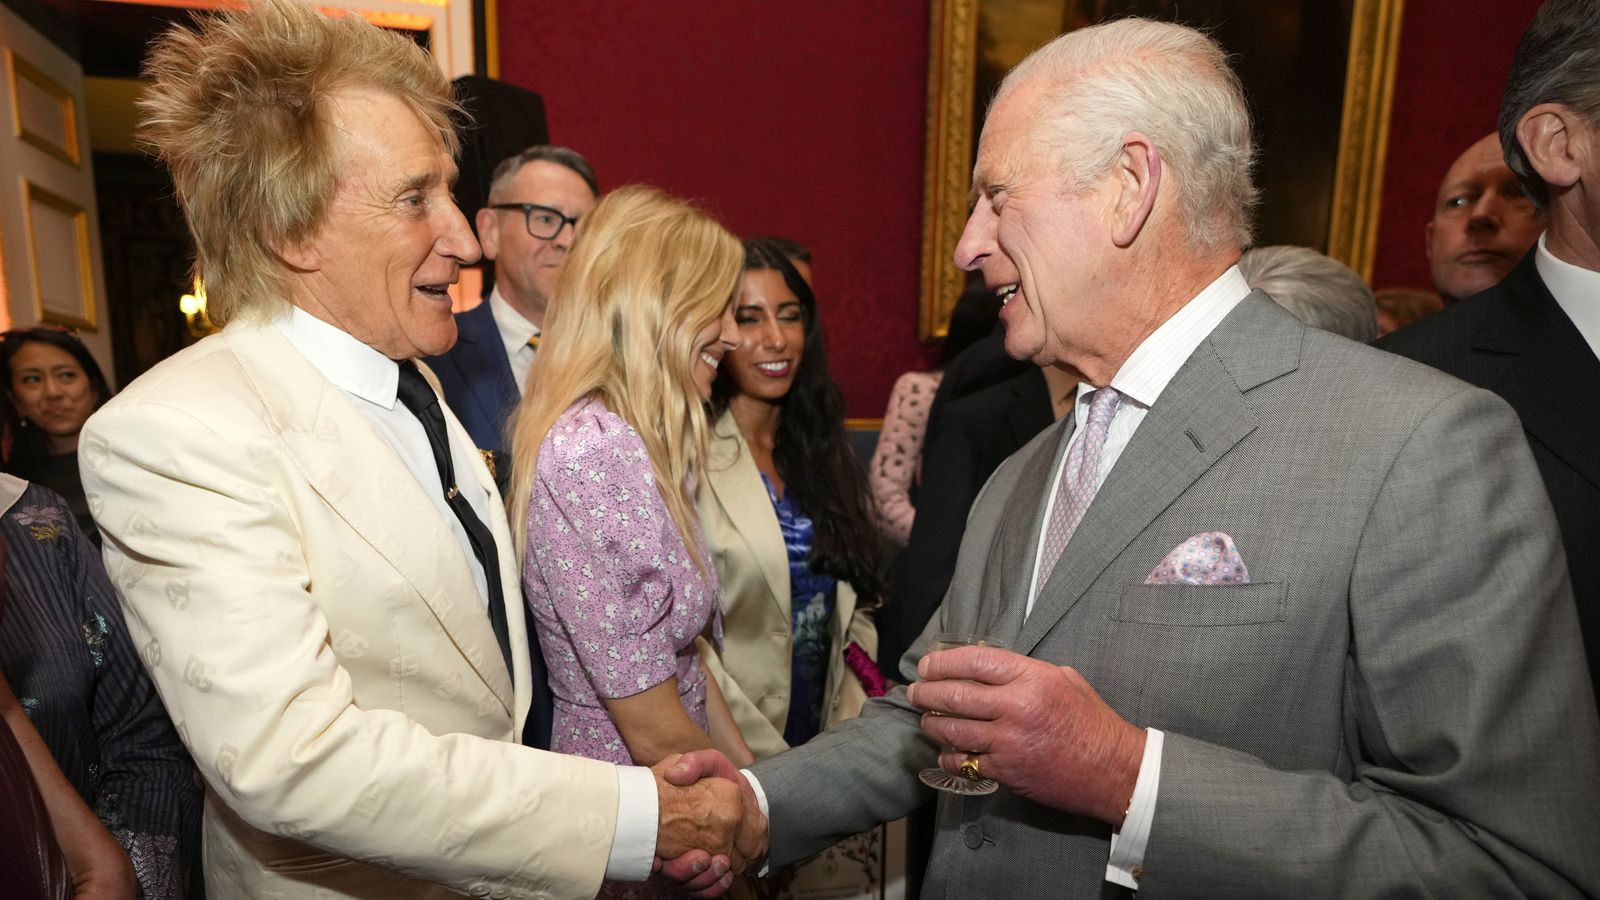 Sir Rod Stewart makes David Beckham joke at King's Foundation awards - as celebrities support royal initiative